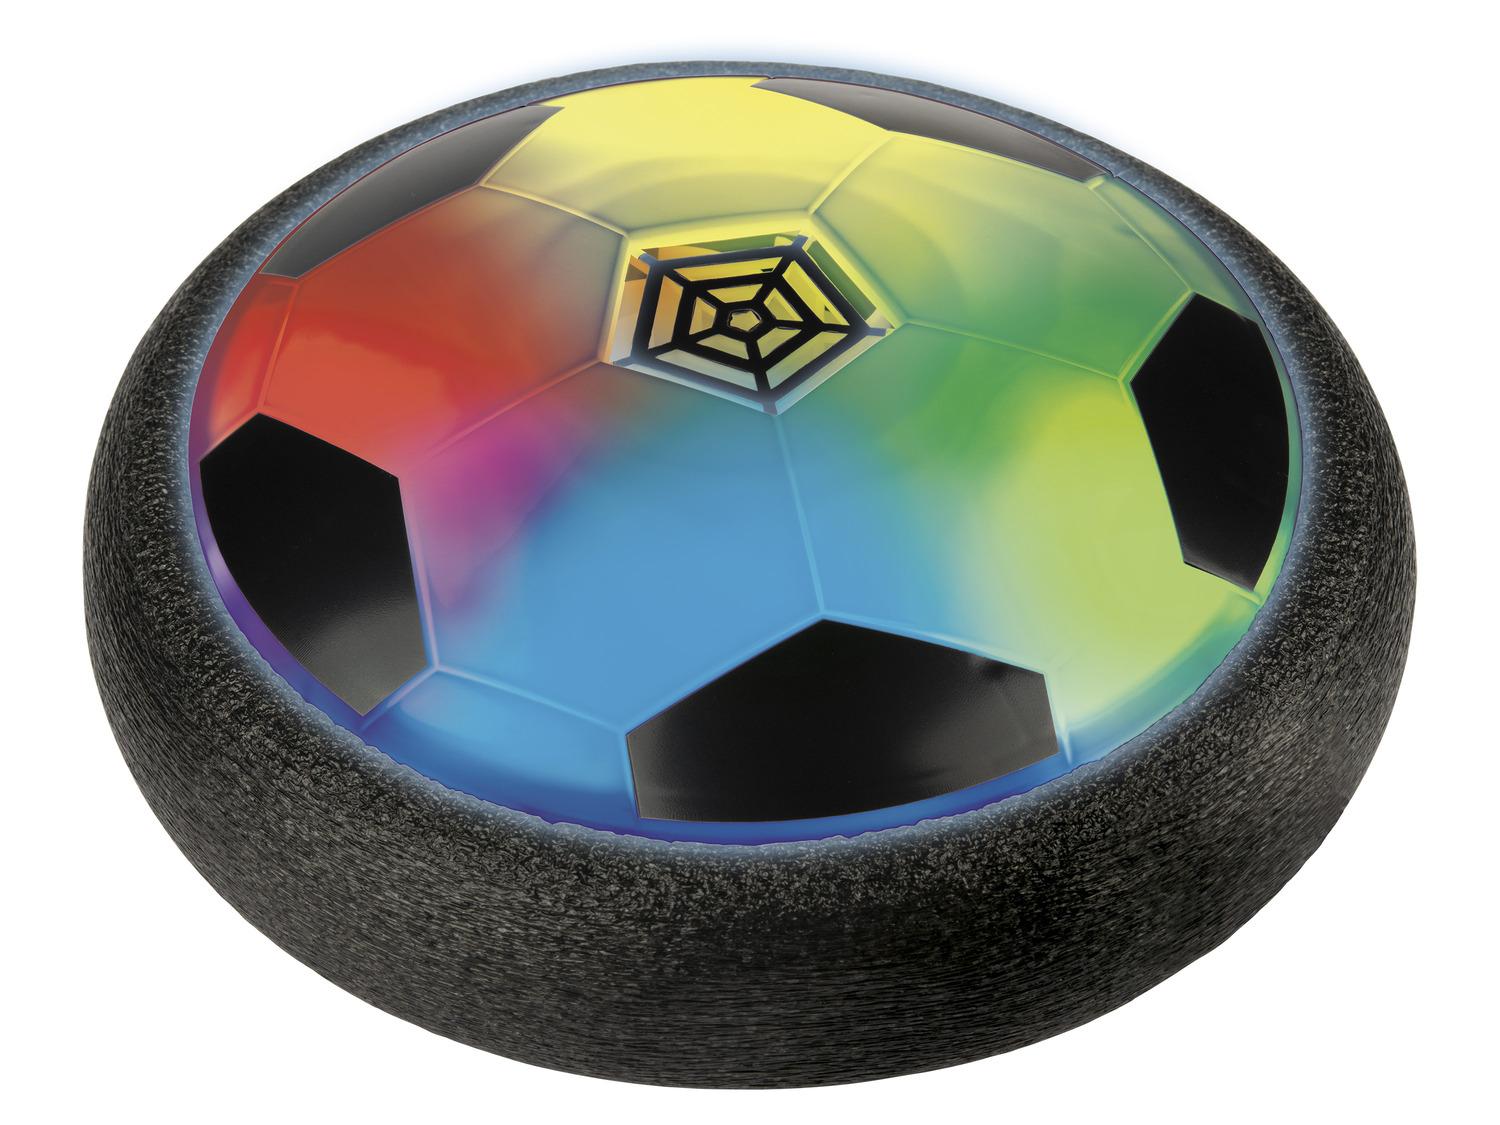 LED | Playtive LIDL zuschaltbare Air-Power-Fußball,